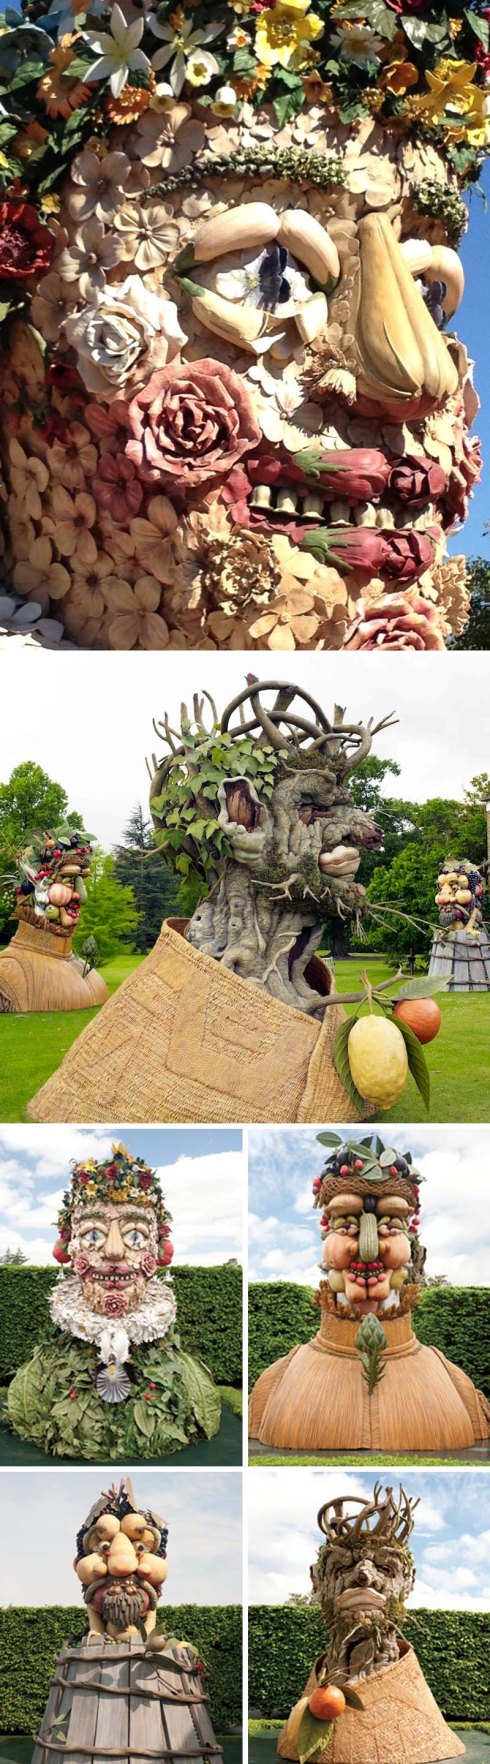 Philip Haas, Four Seasons en Nueva York Botanical Gardens, Escultura.  arcimboldo